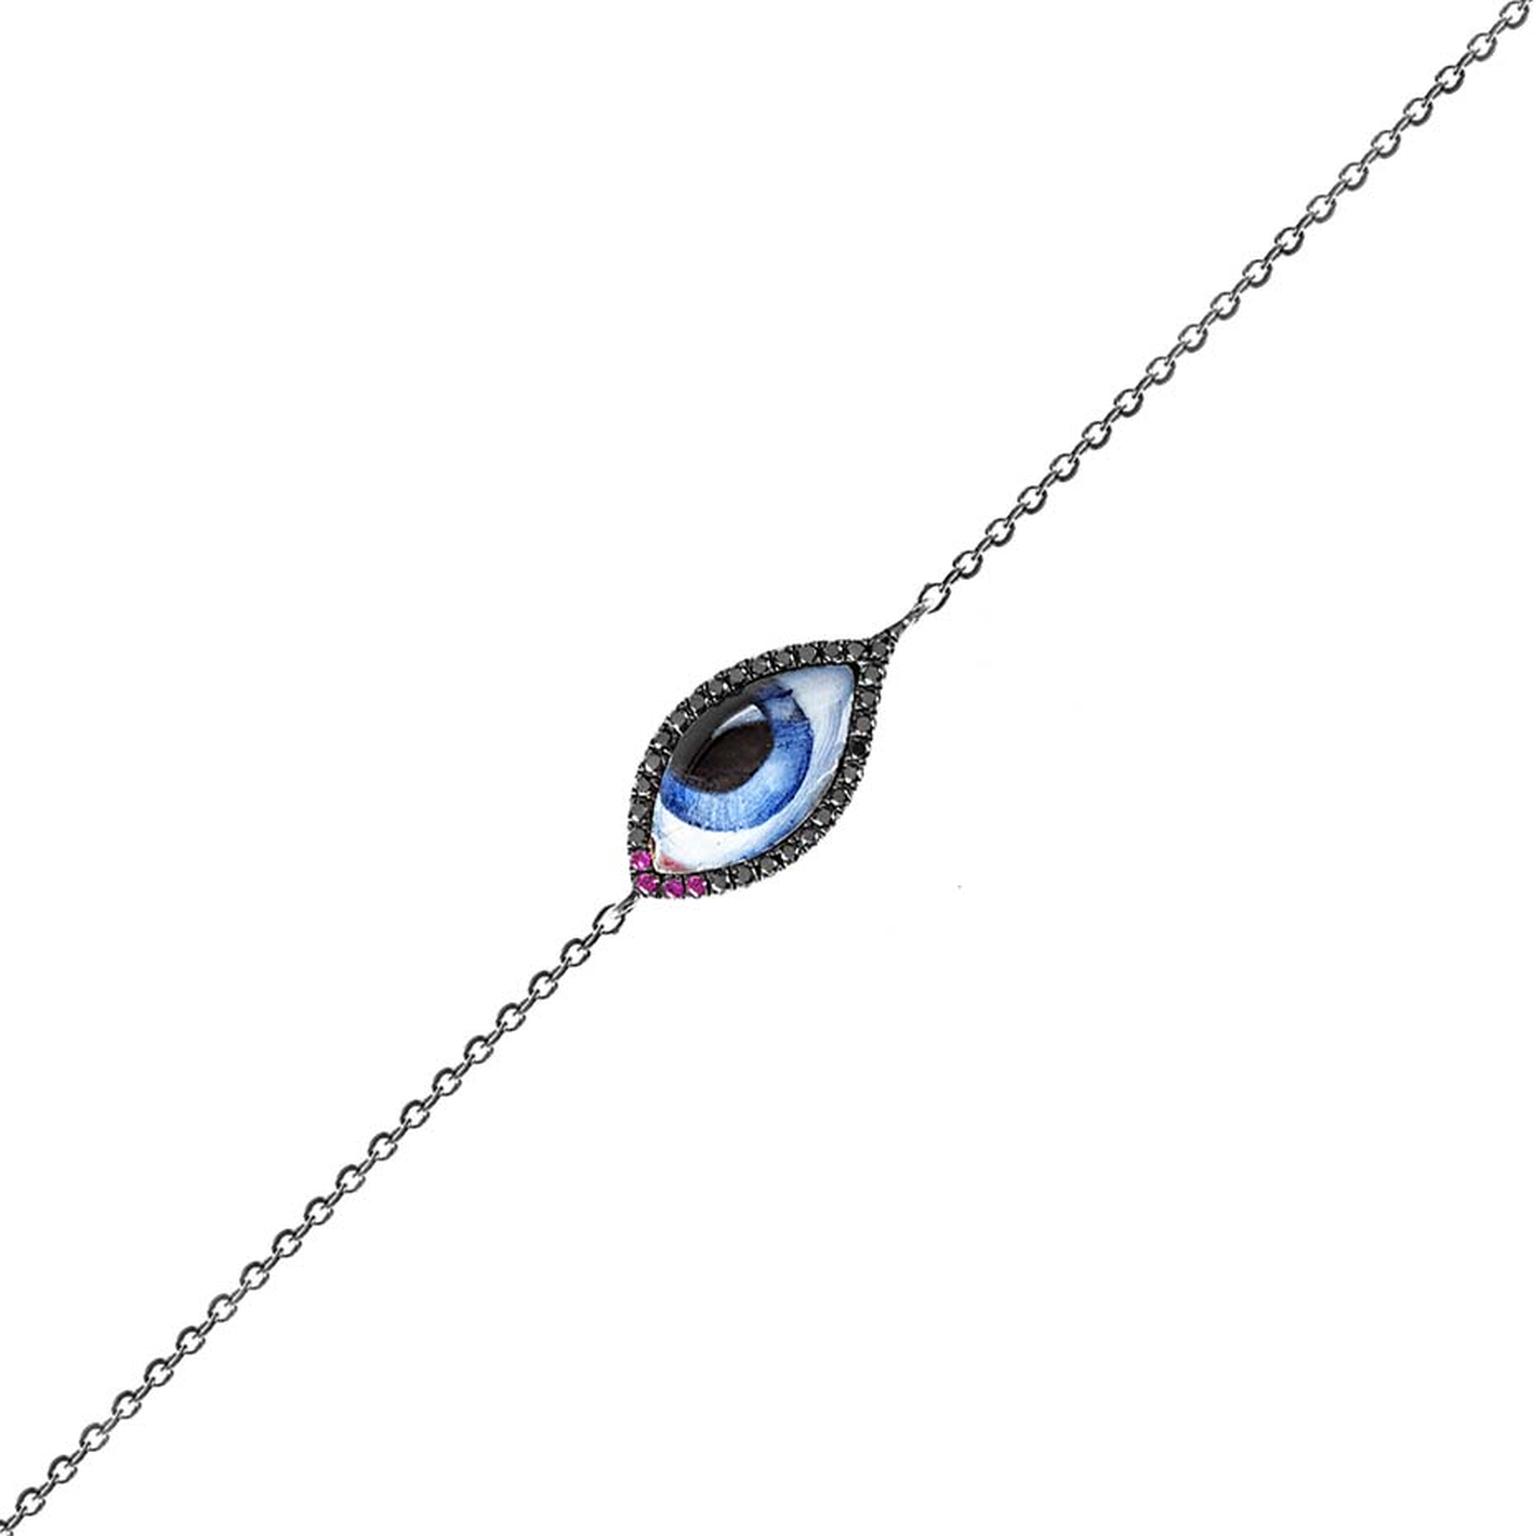 Lito Tu Es Partout bracelet featuring a blue enamelled eye and black diamonds.